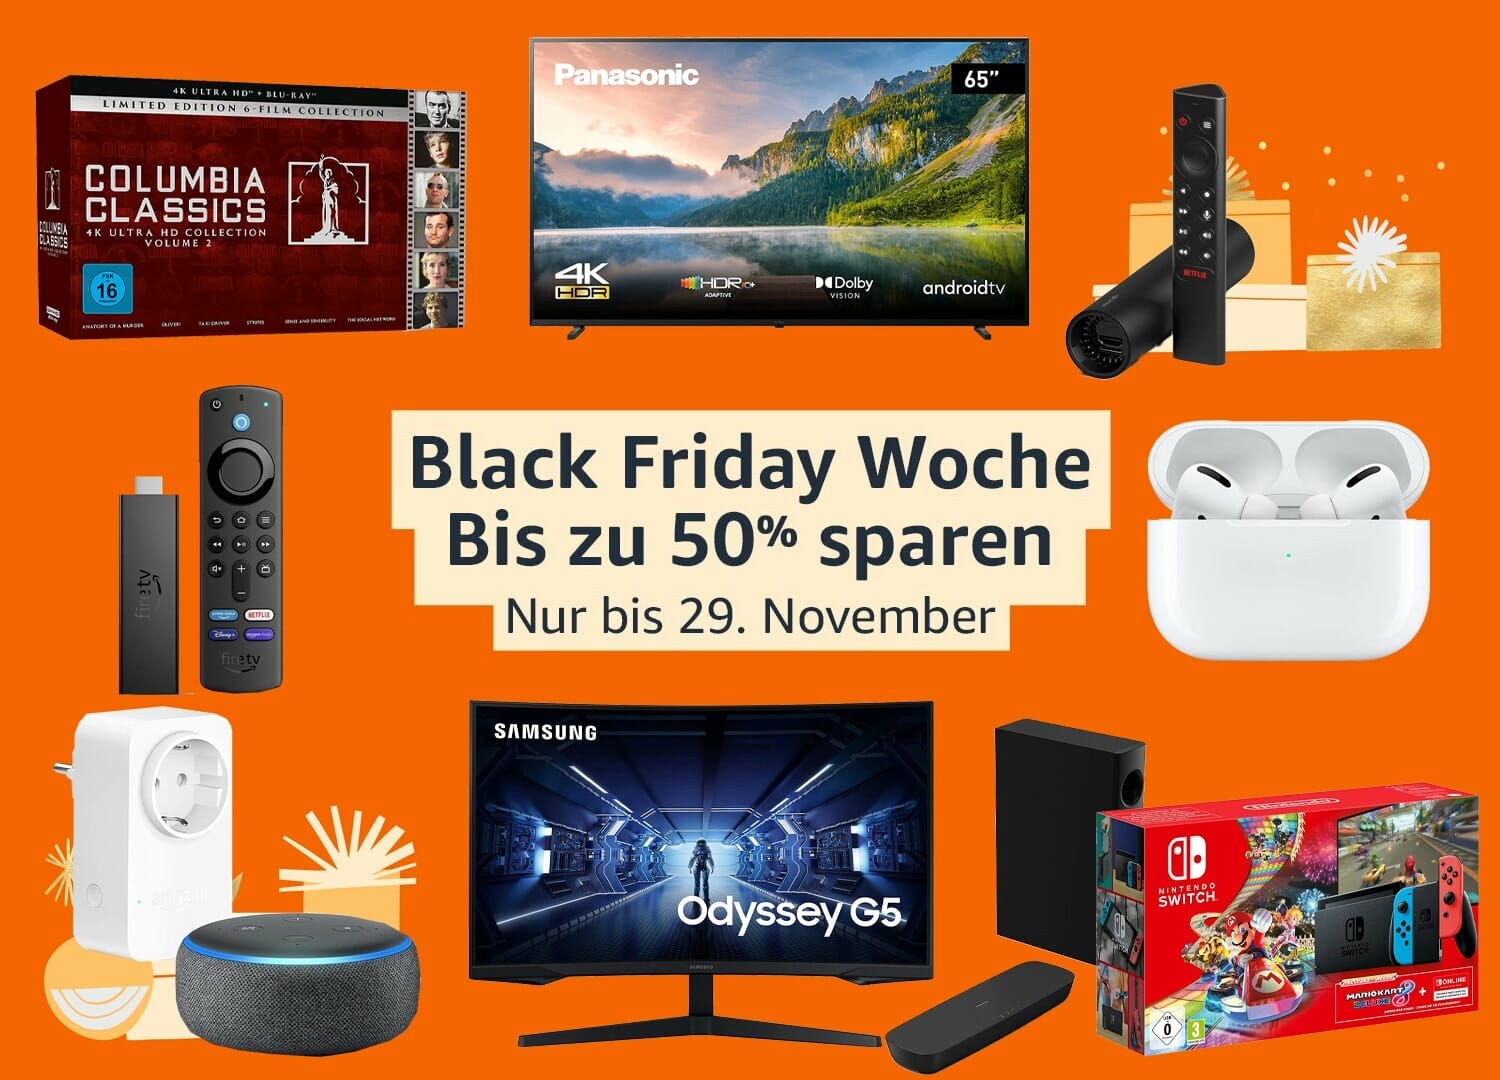 segment Laborator Consiliu  Amazon Black Friday Woche Tag 5: Panasonic TVs, günstige Nvidia Shield TV  uvm.